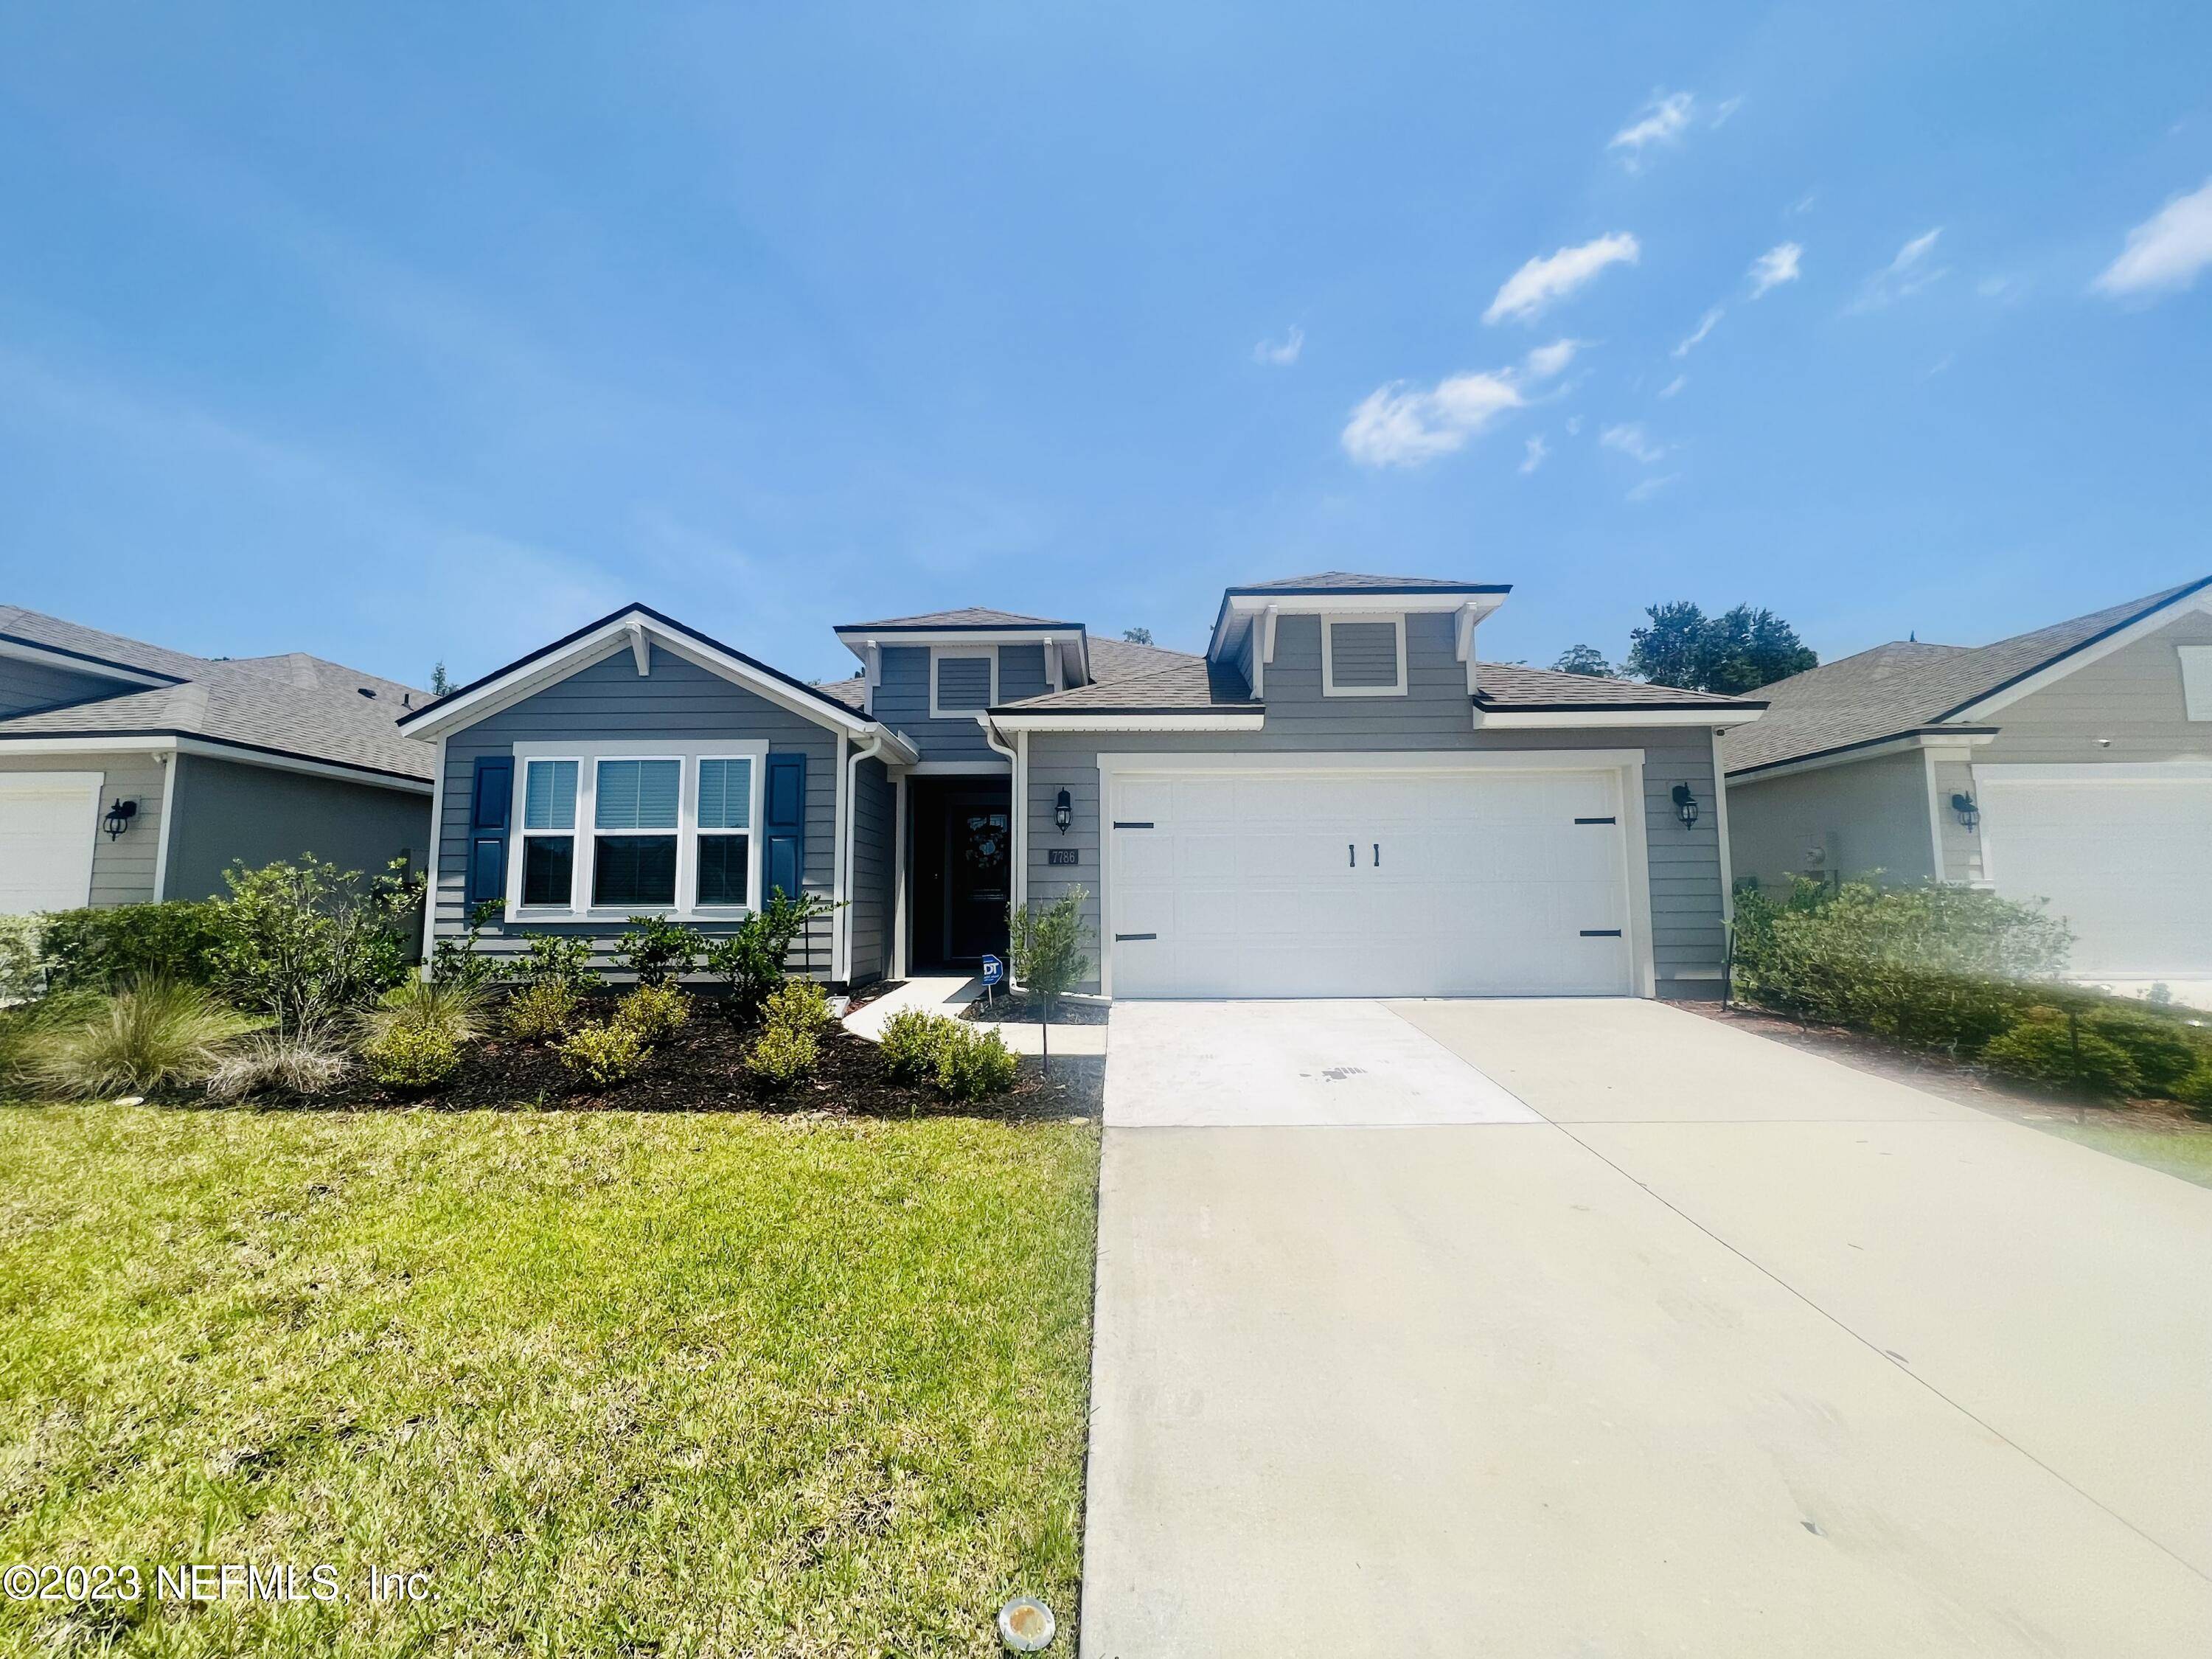 Homes for sale - 7786 ISLAND FOX RD, Jacksonville, FL 32222 – MLS#1...